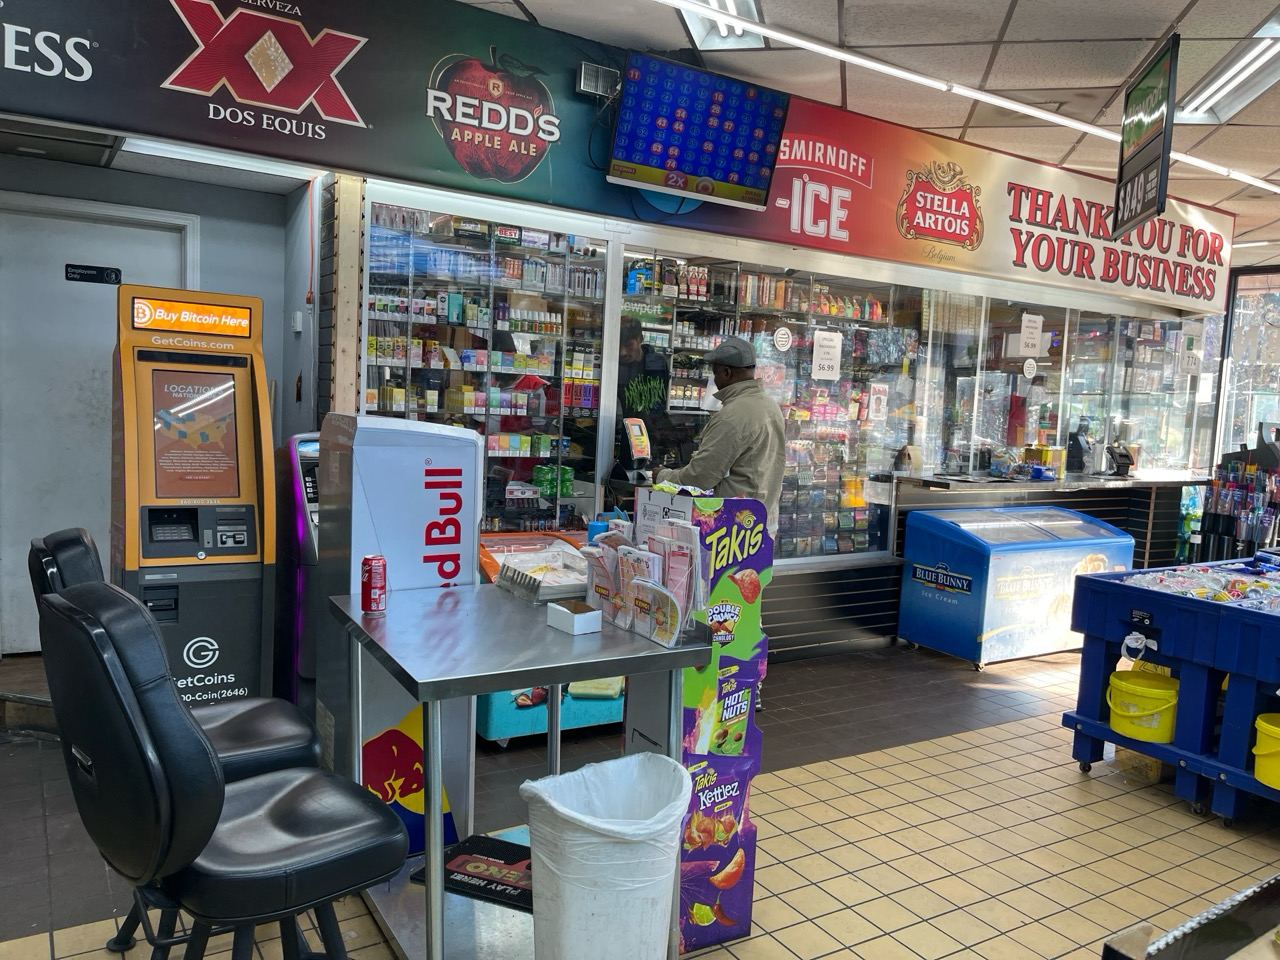 Getcoins - Bitcoin ATM - Inside of Texaco in Atlanta, Georgia